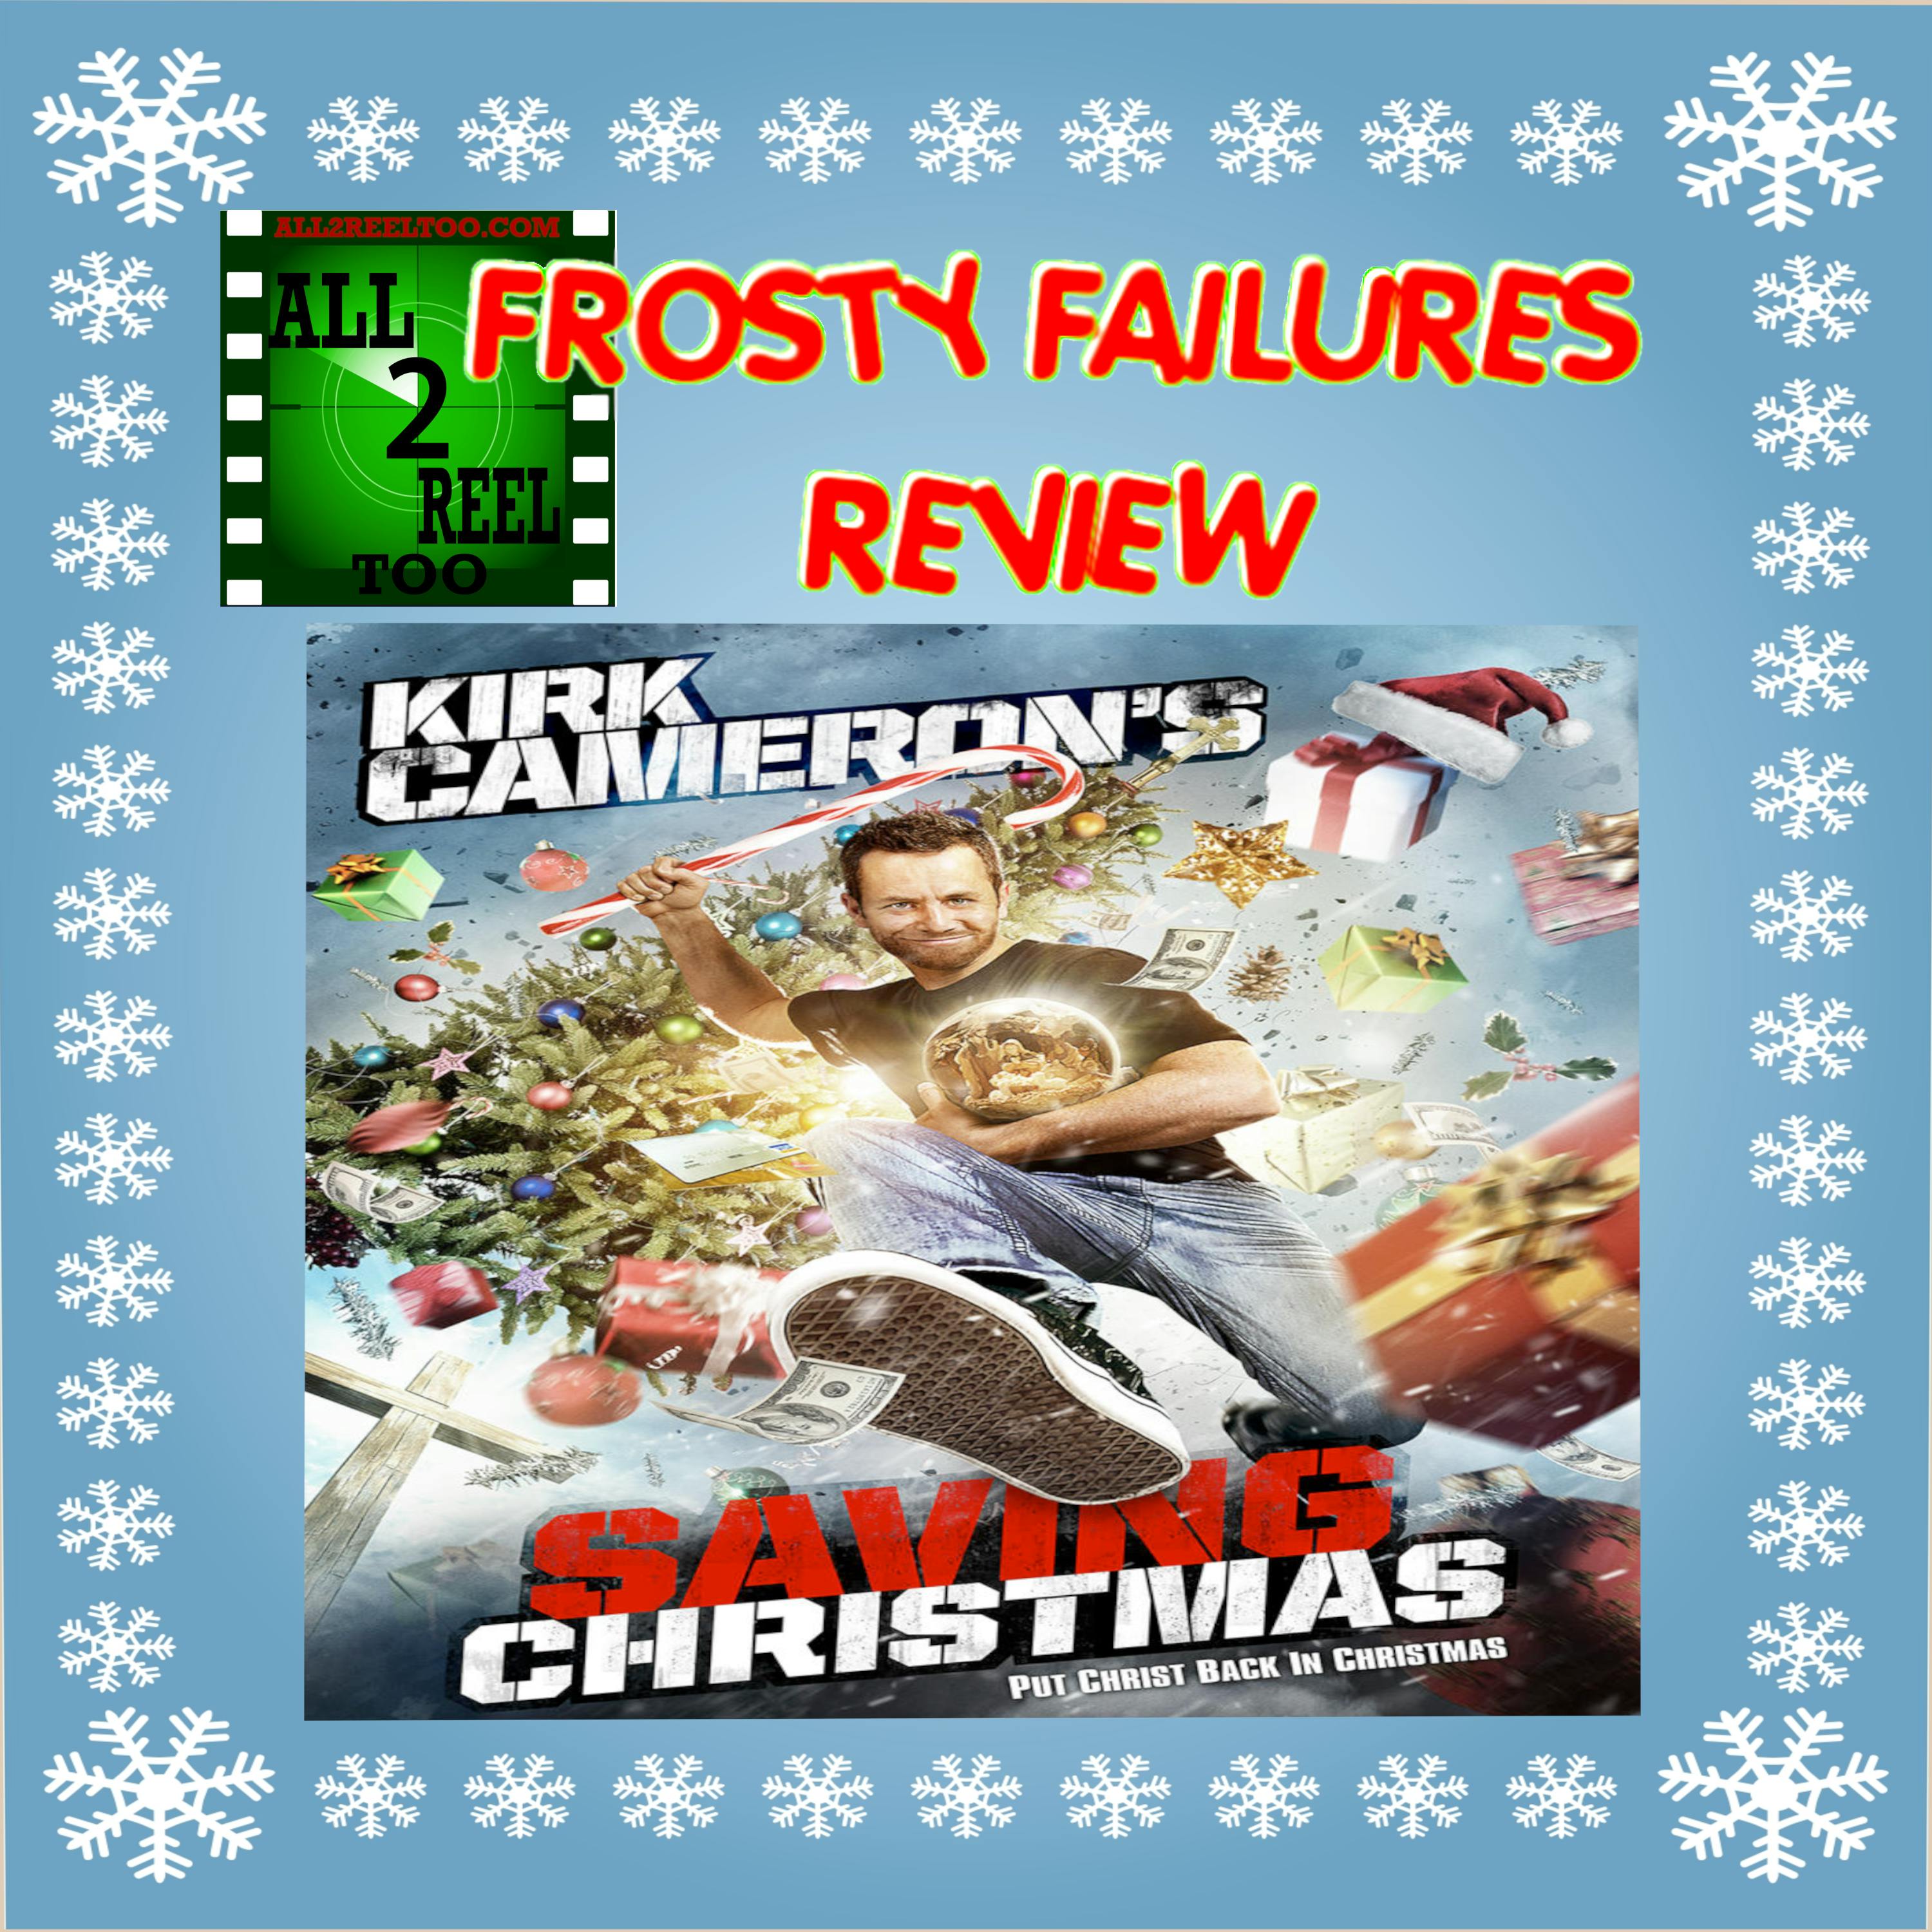 Kirk Cameron's Saving Christmas (2014) - FROSTY FAILURES REVIEW Image